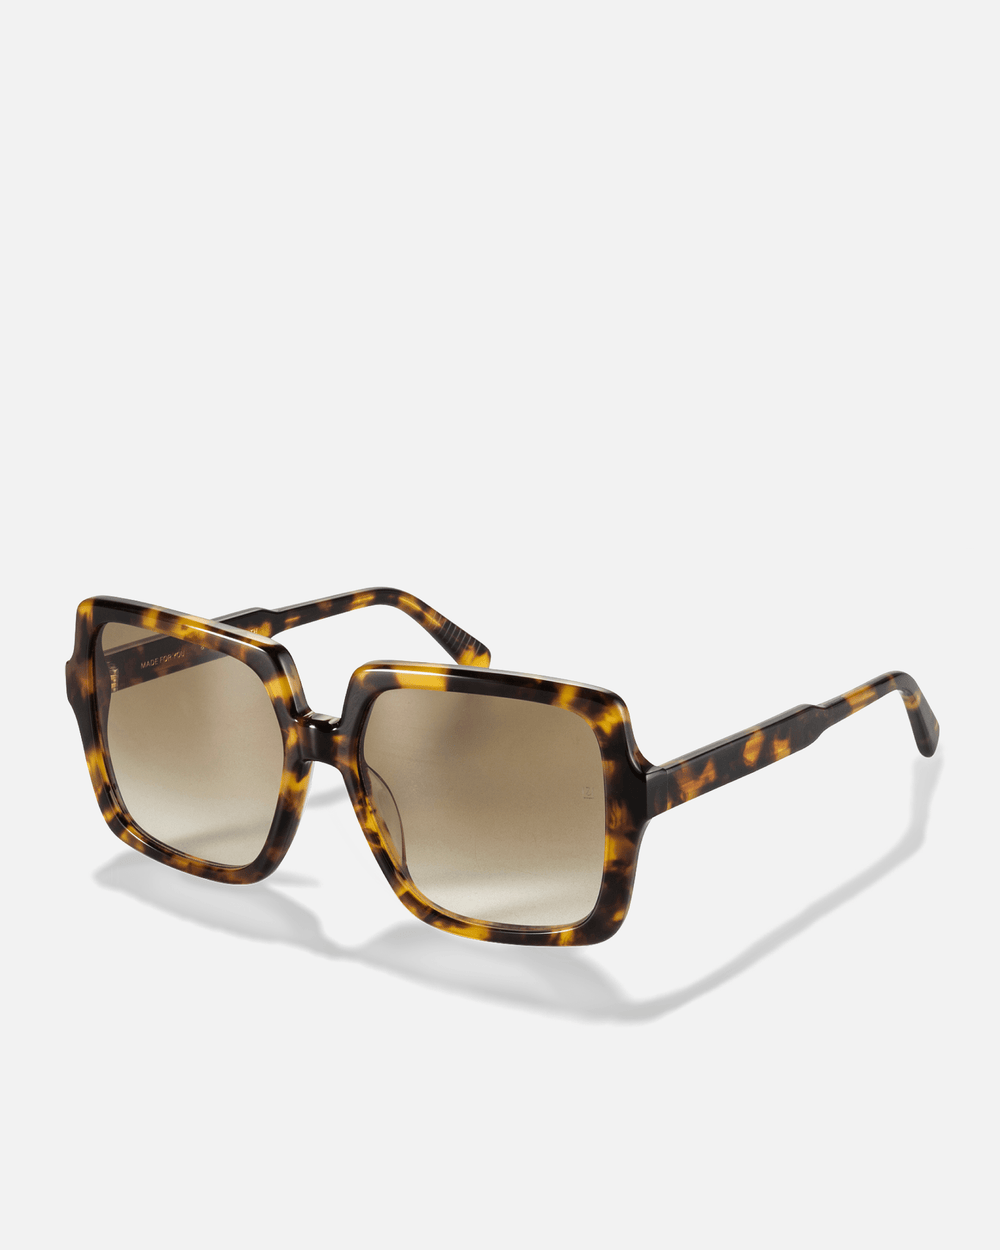 CHERRY Bio-Acetate Square Frame Sunglasses for Men & Women | Honey Speckle (Havana) | Sunnies Collection | OLLU